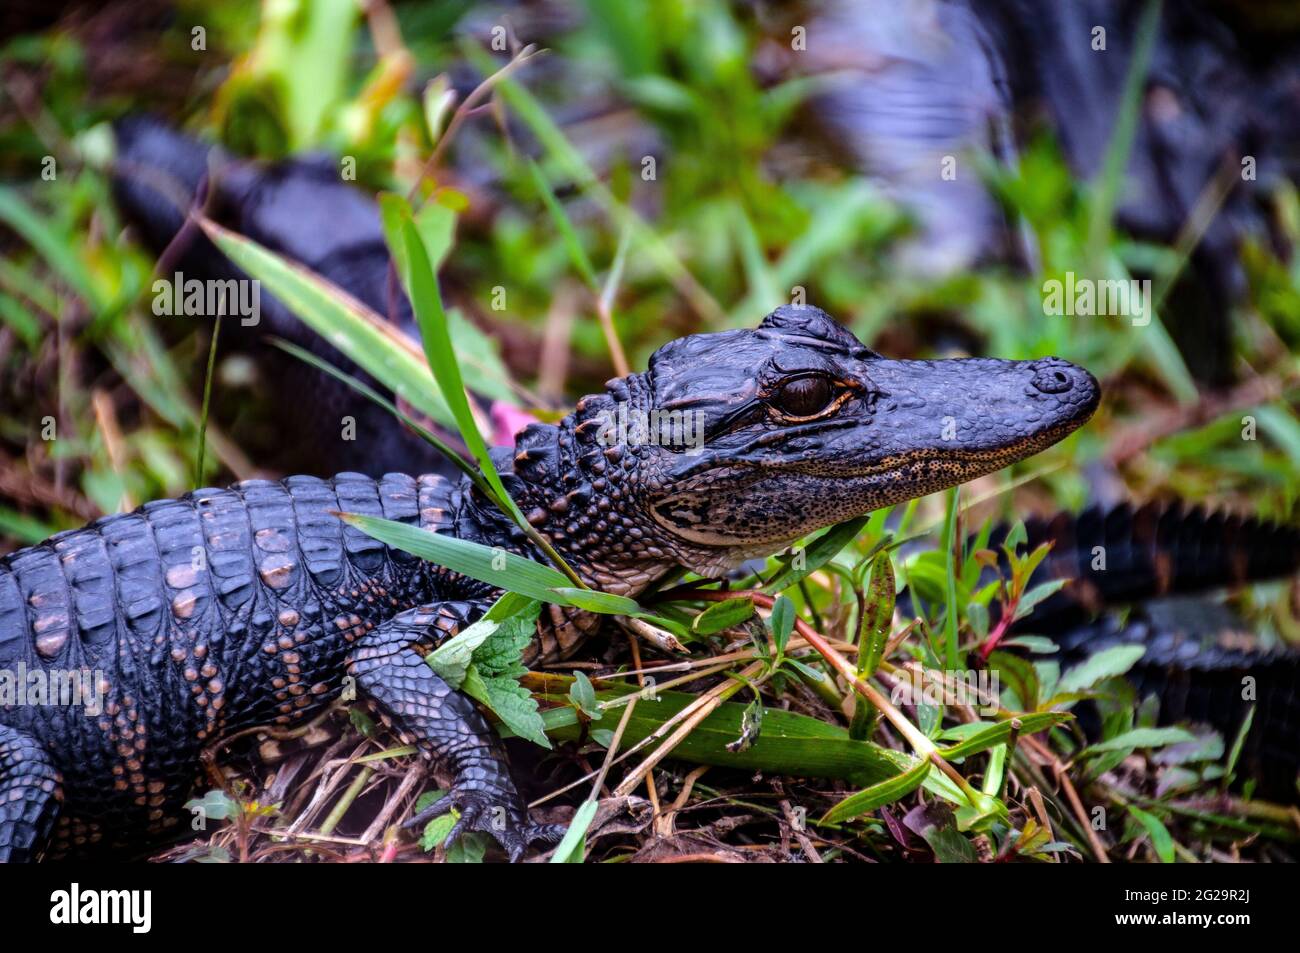 Baby American Alligator (Alligator mississippiensis), Shark Valley Visitor Center, Everglades National Park, Florida Stockfoto